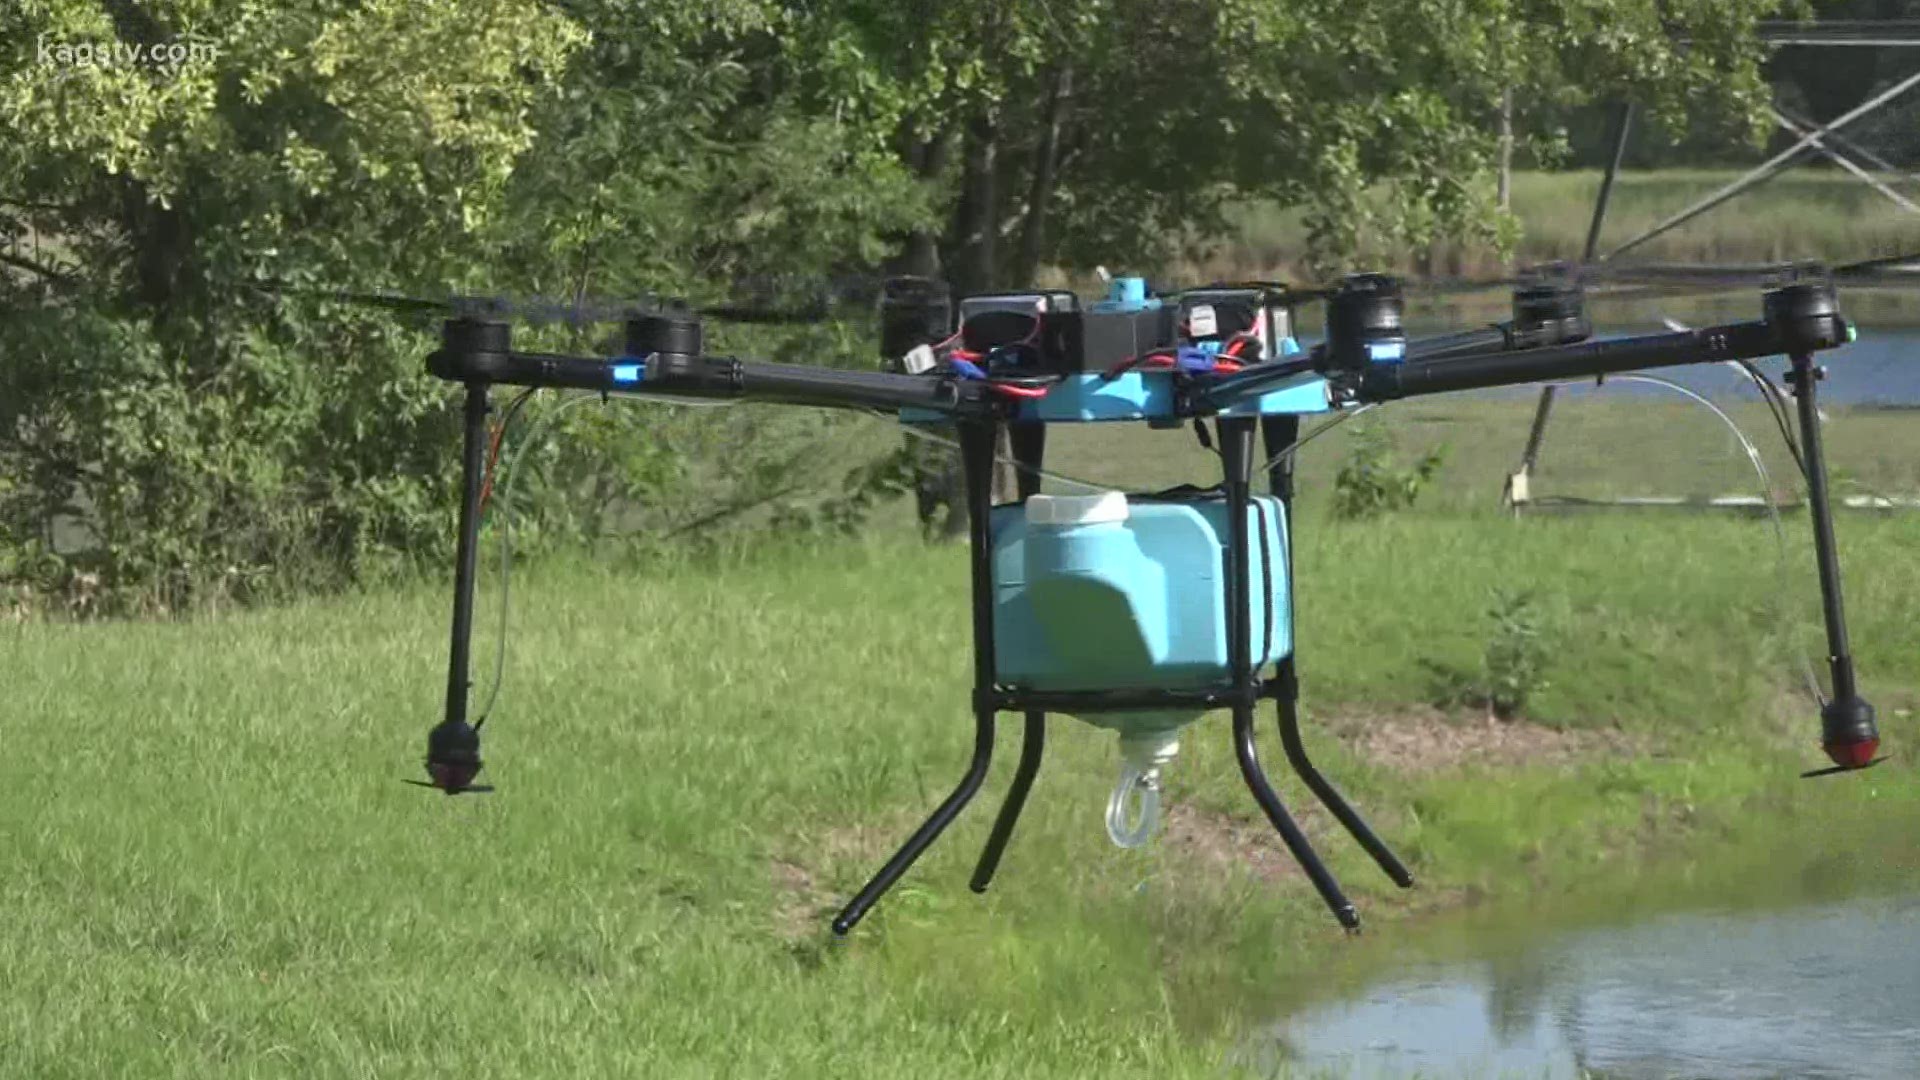 Drone companies plan partnership with TAMU for sanitation at Kyle Field